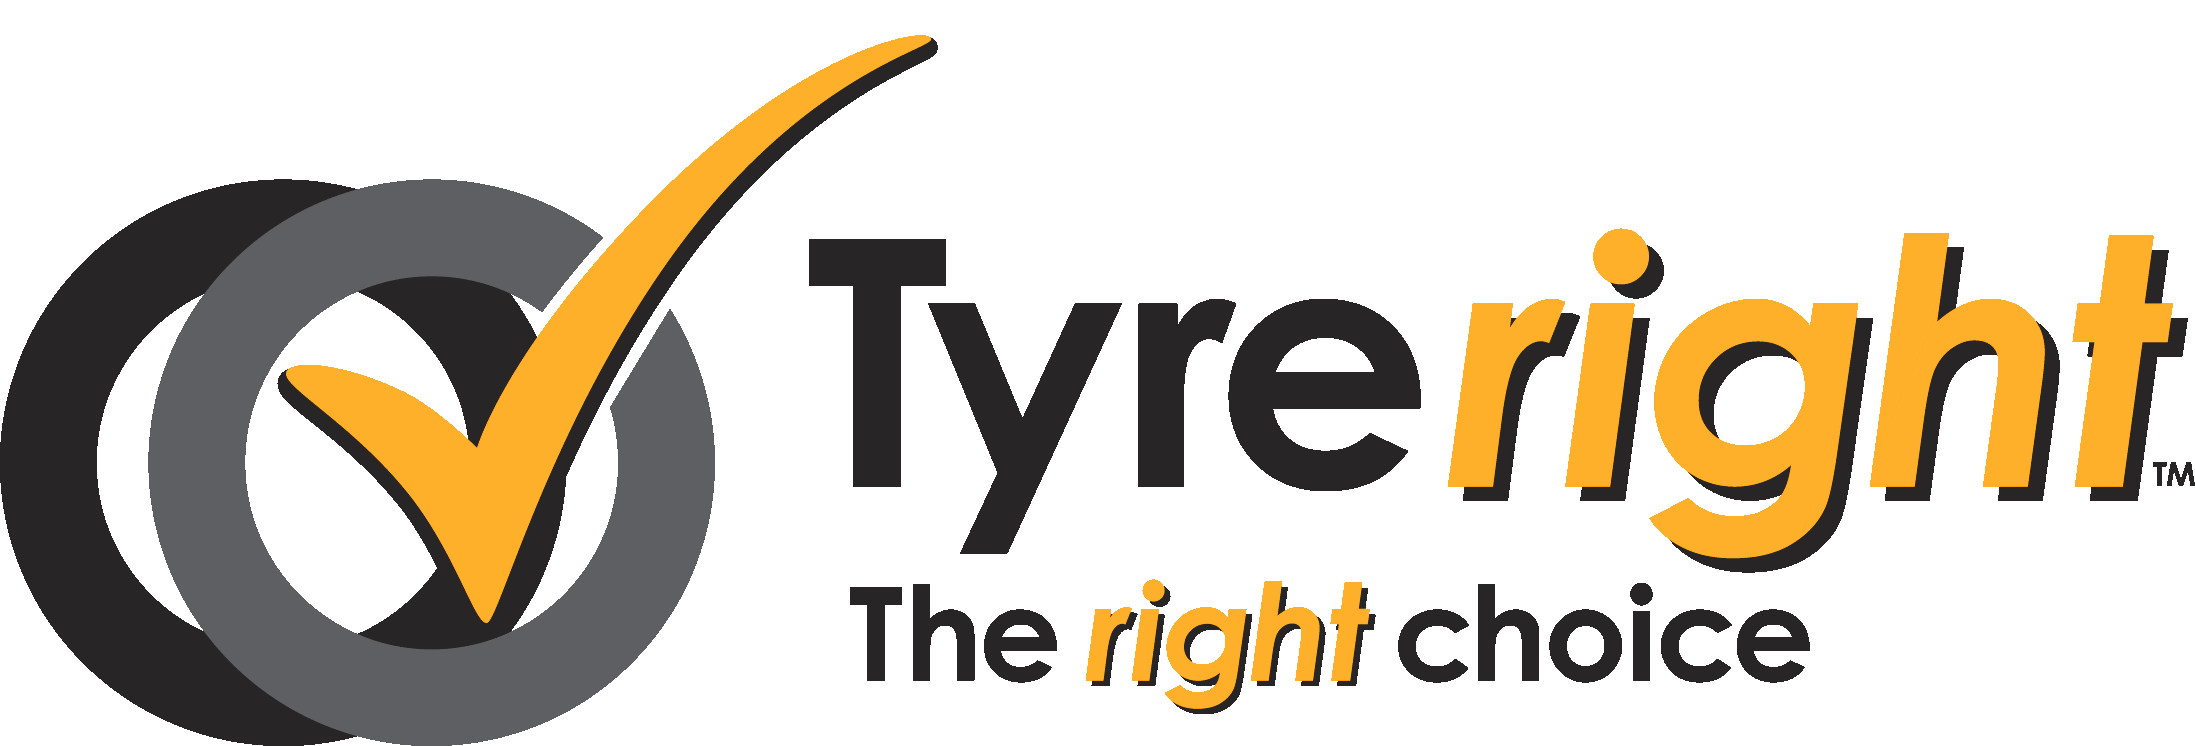 Right Logo - Tyre right logo